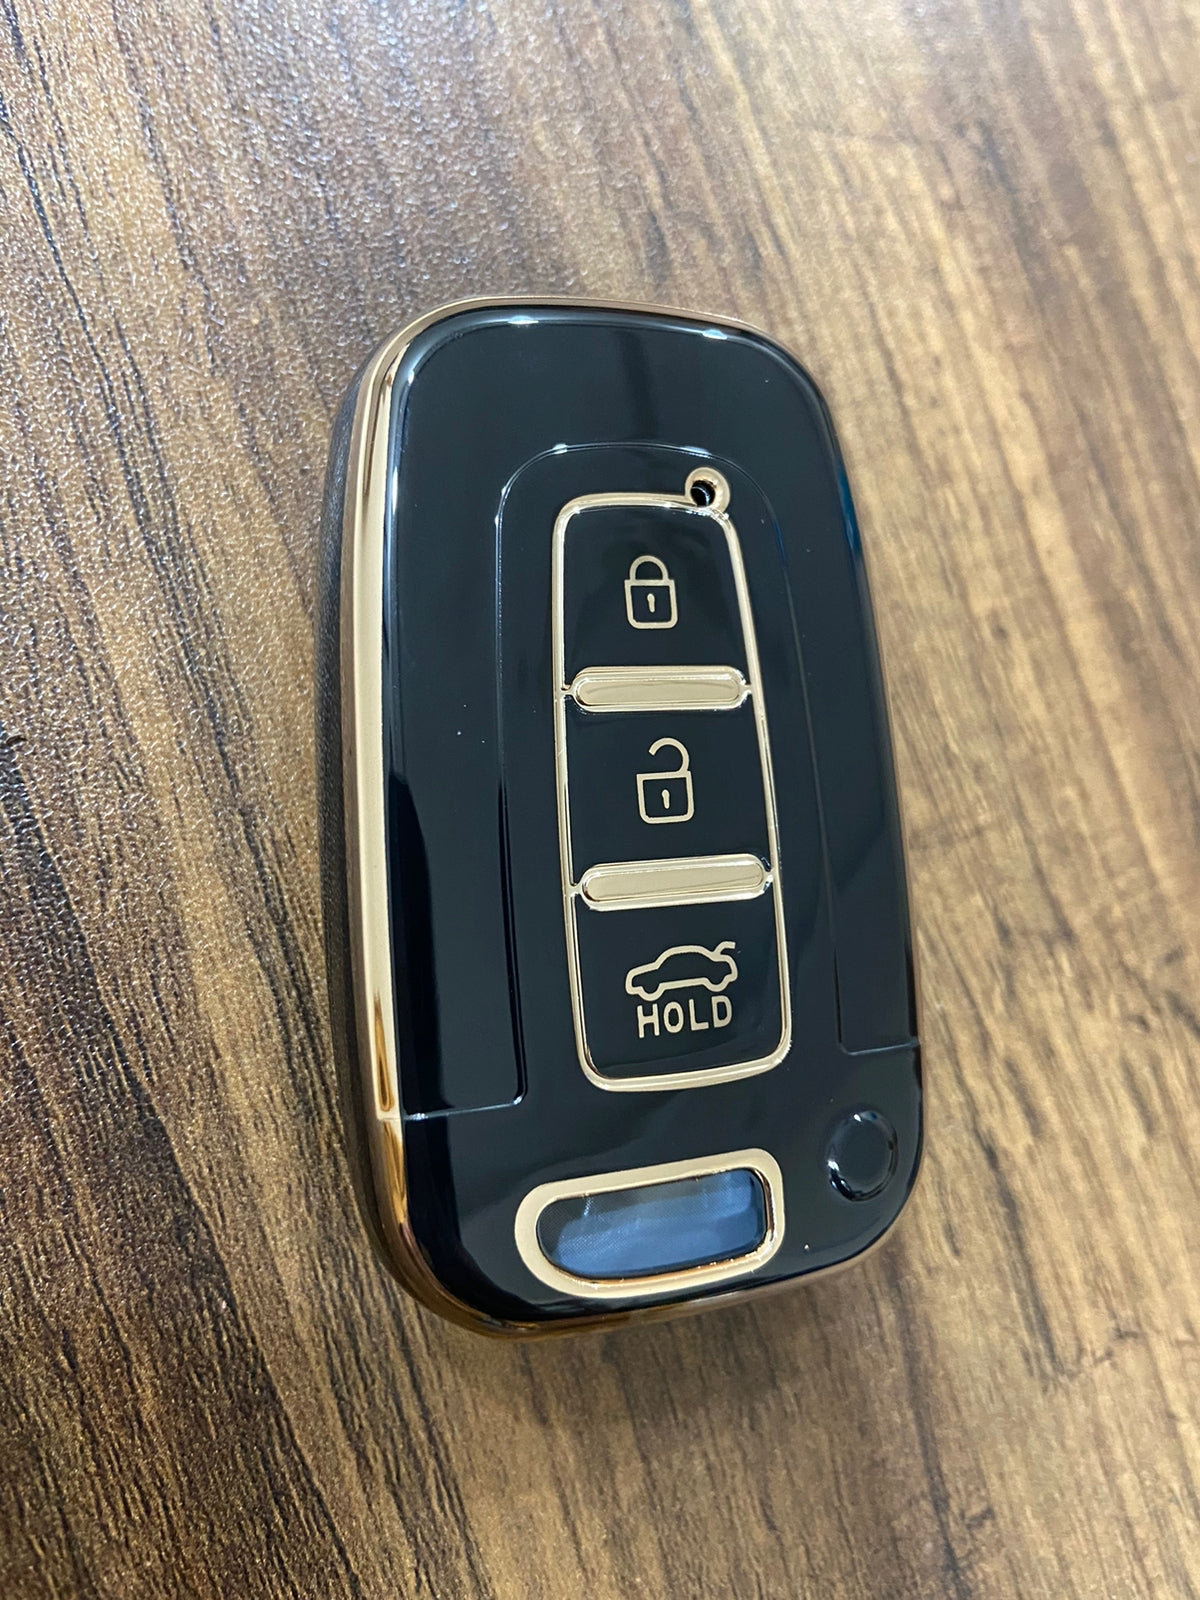 TPU Key Cover Compatible With Hyundai Verna Fluidic Old i20 Santafe Push Button Smart Key Cover